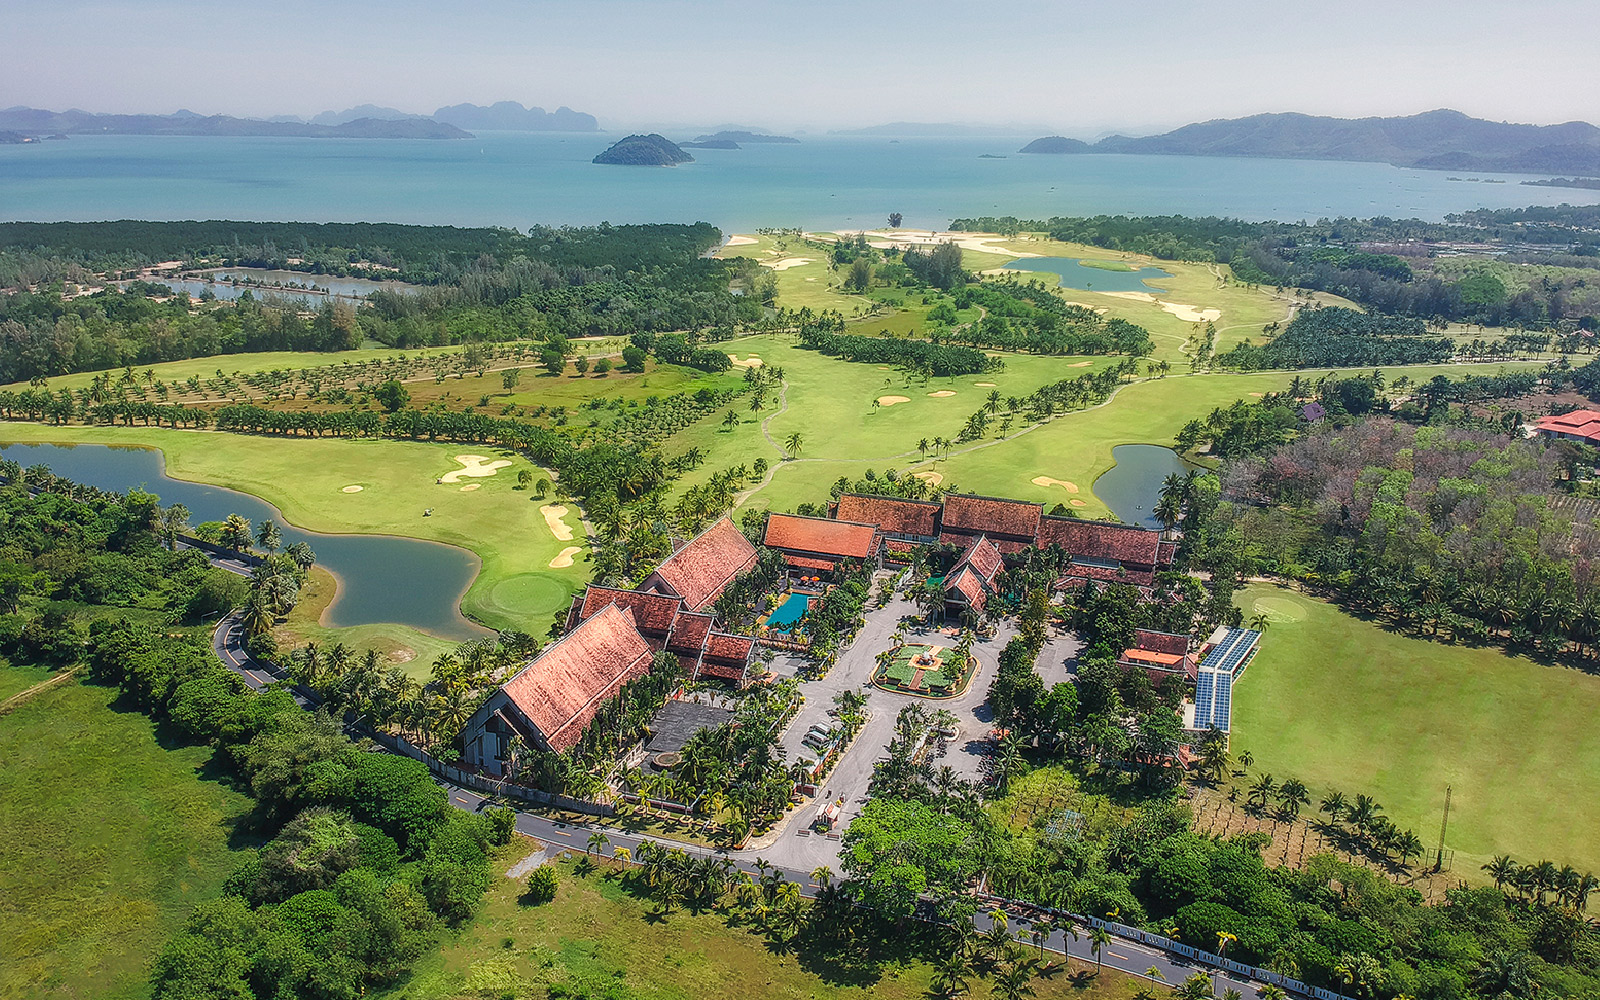 Mission Hills Golf Club in Phuket, Thailand